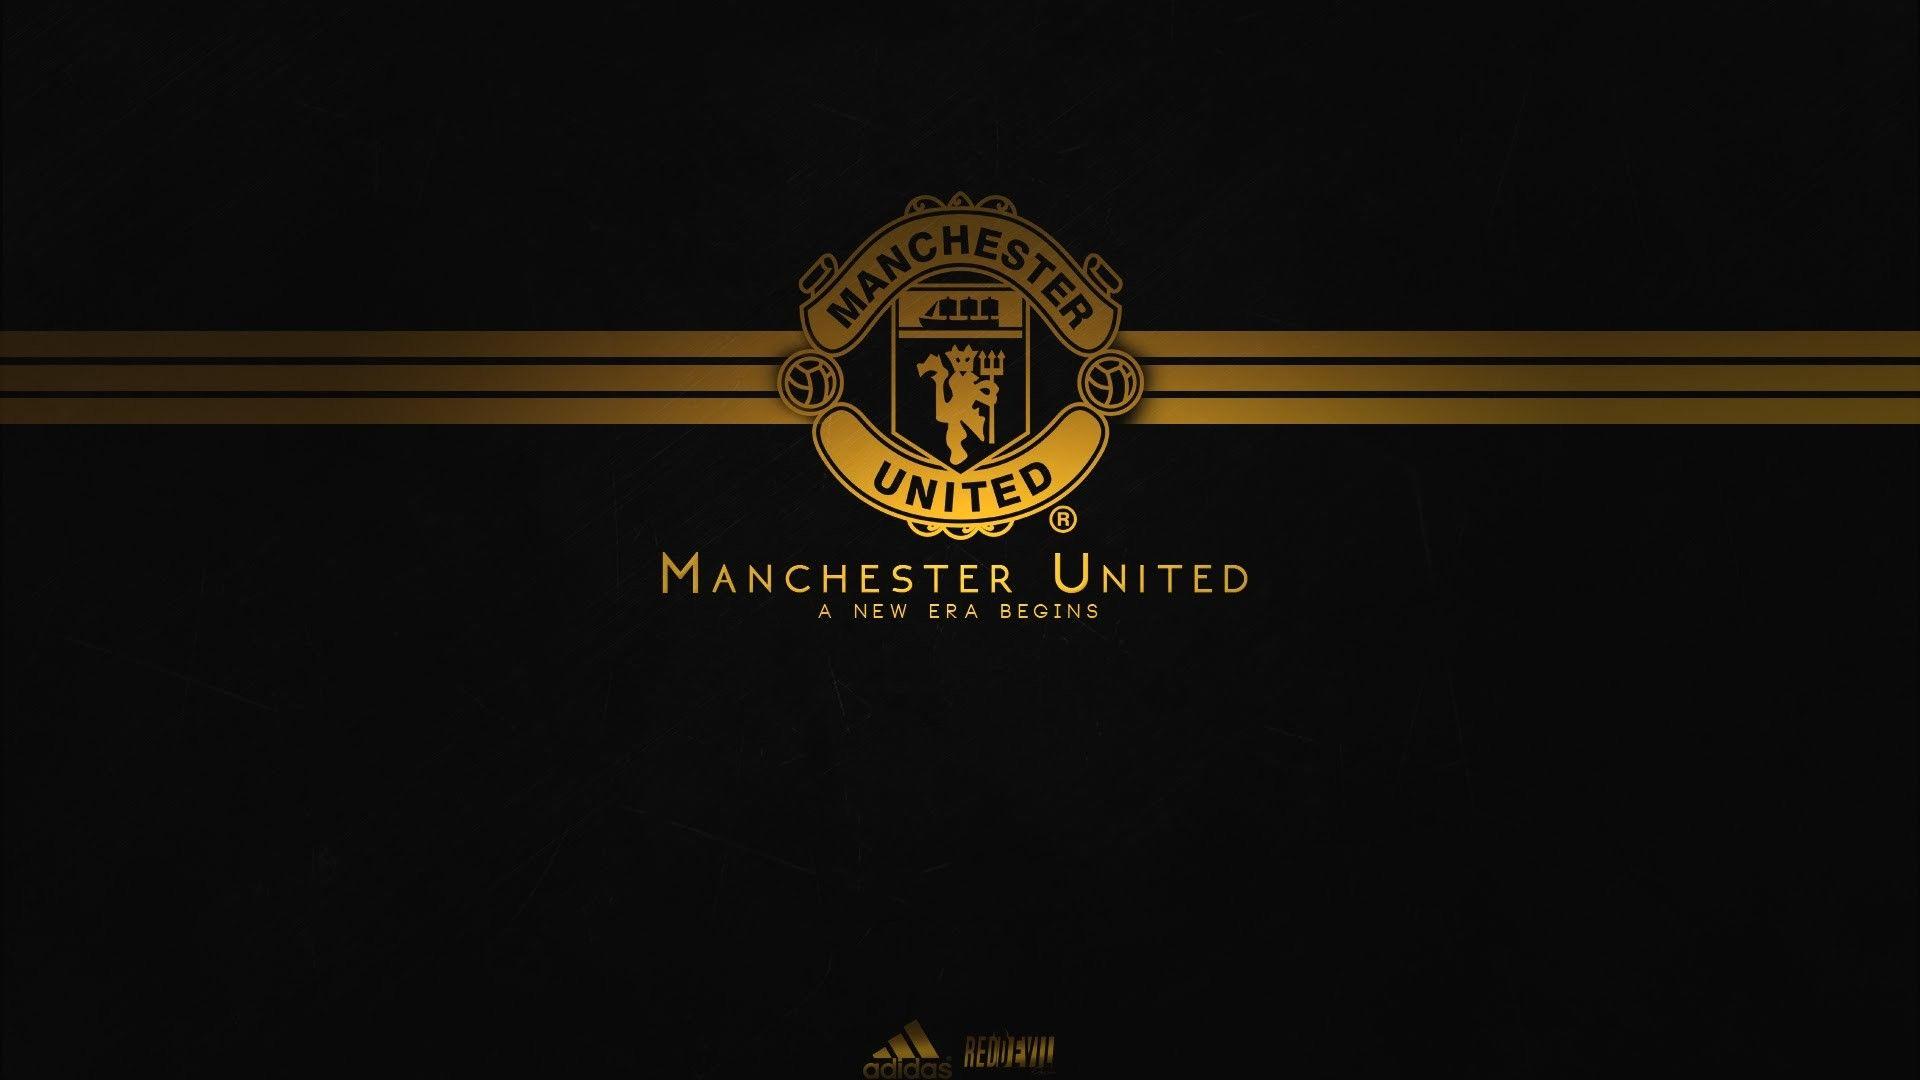 Manchester United 1080p Wallpaper Manchester united wallpaper for desktop hd. manchester united 1080p wallpaper